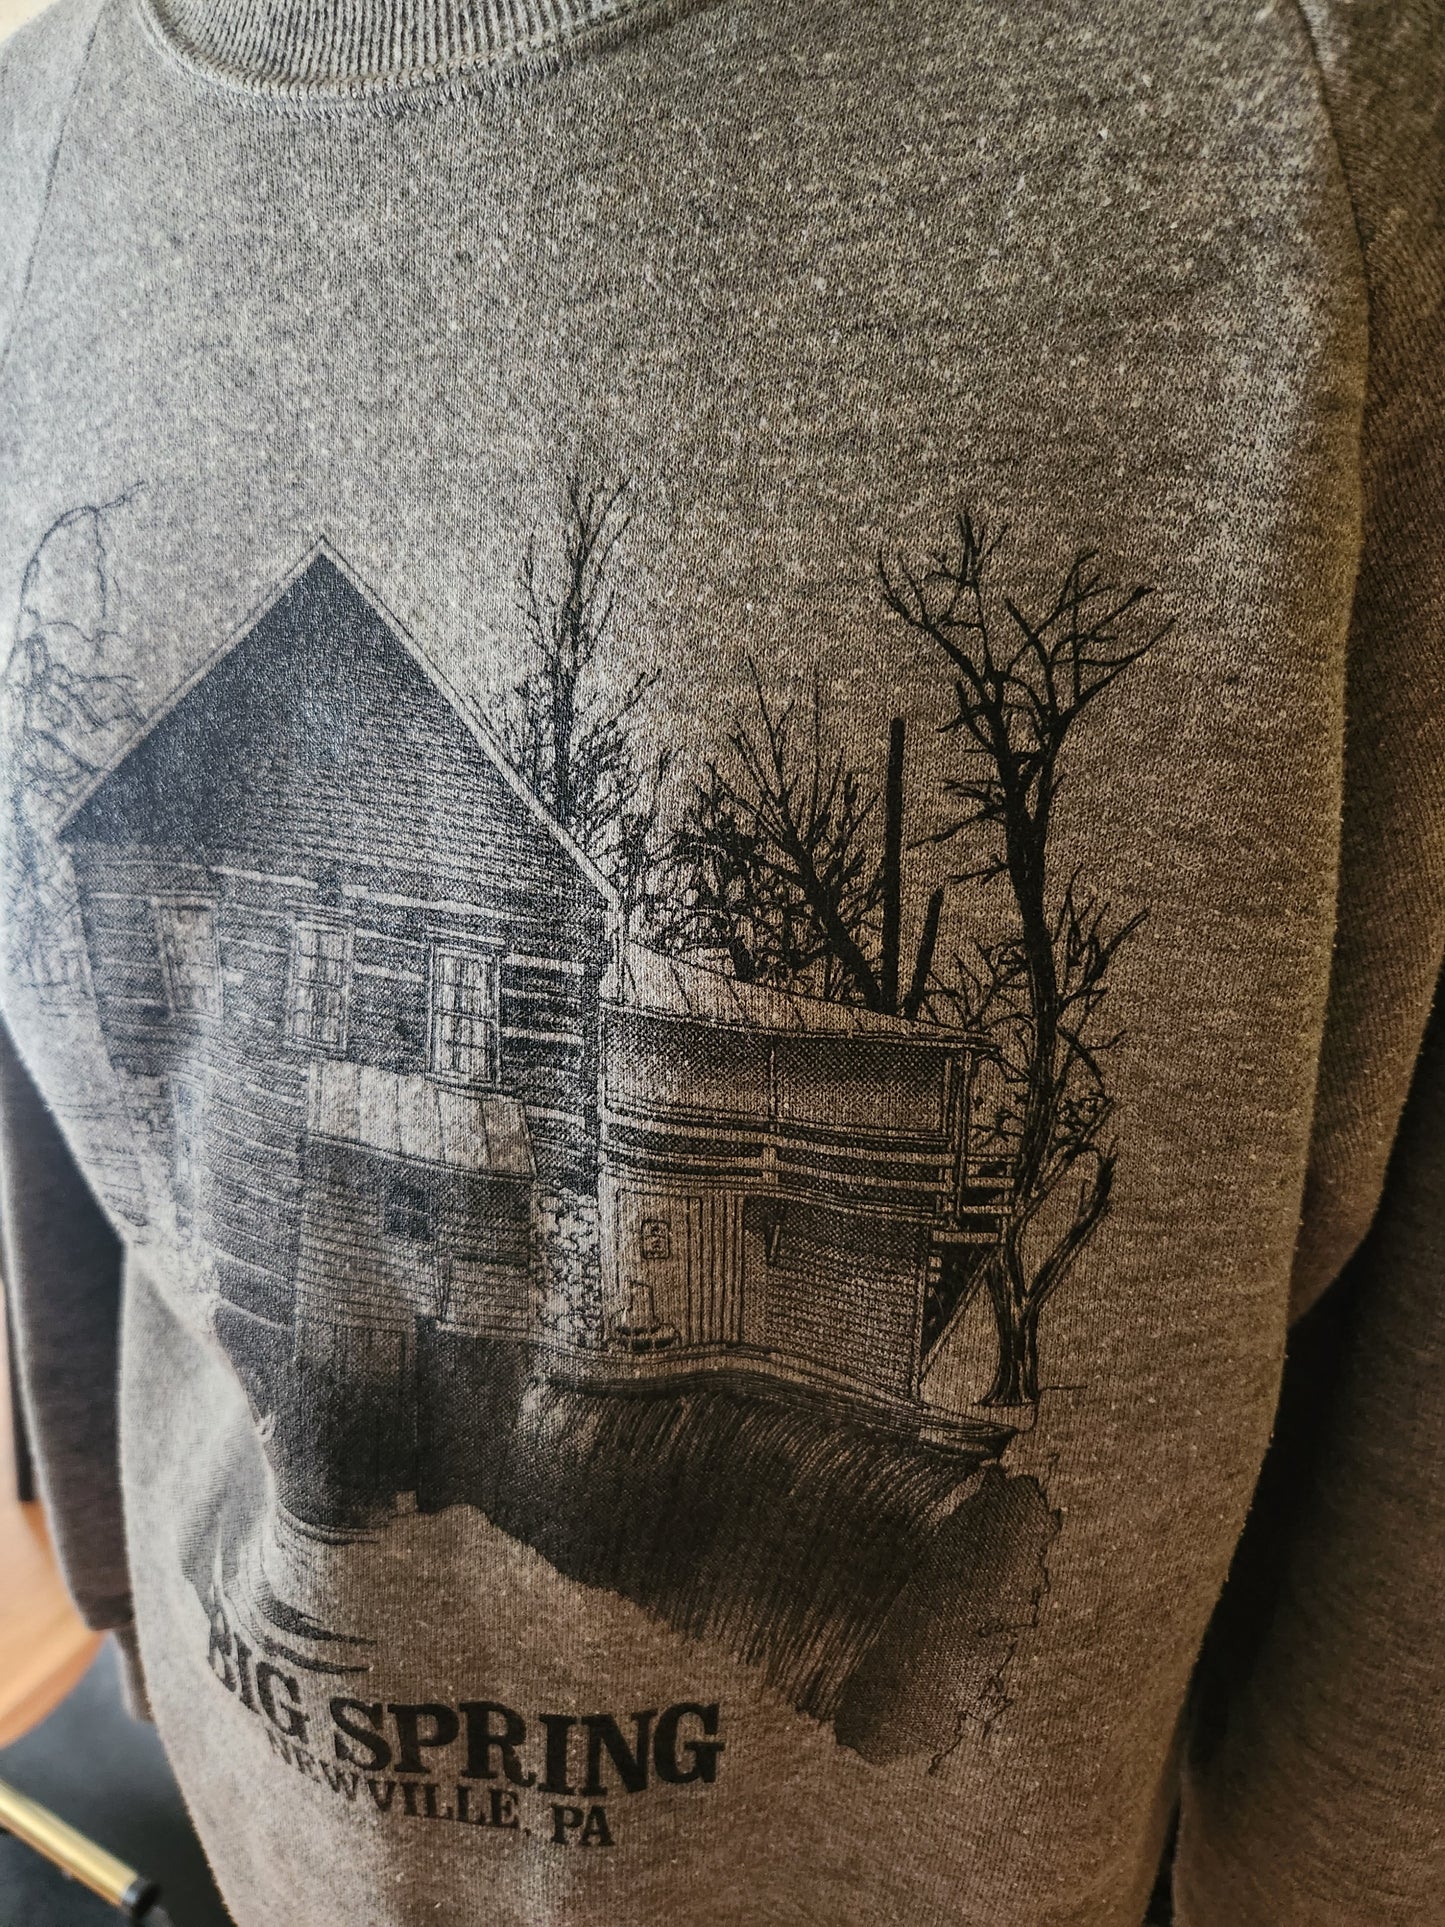 Vintage Newville PA Sweatshirt by Jerzees